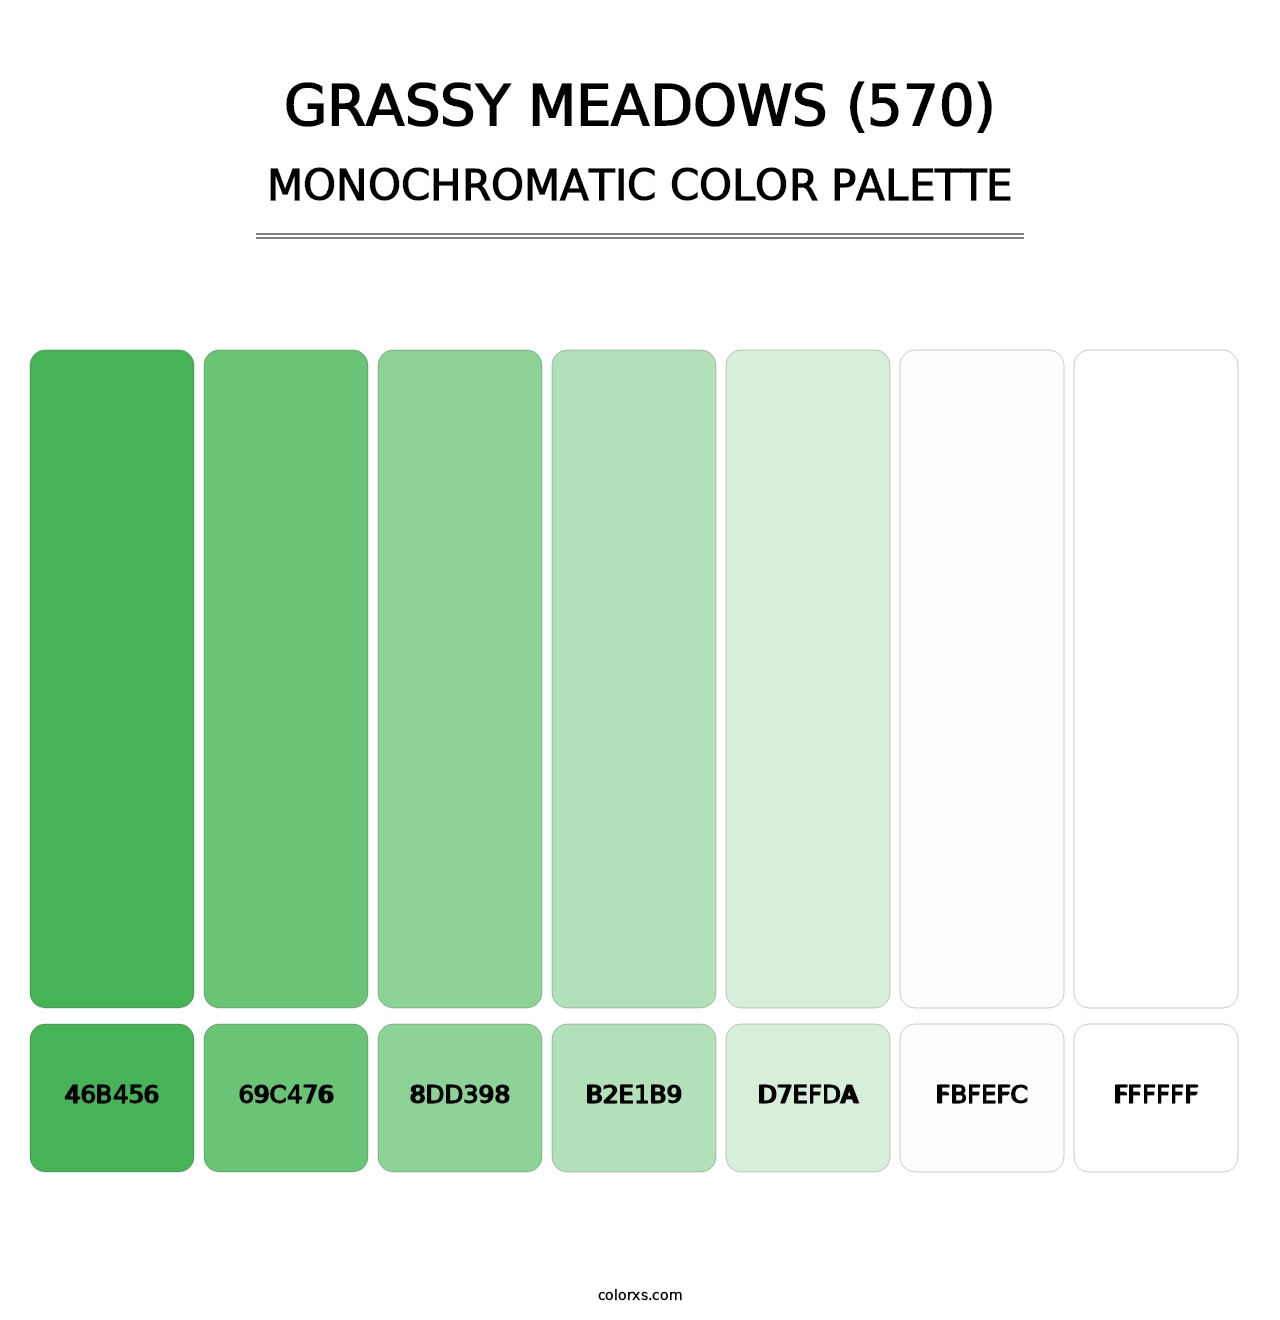 Grassy Meadows (570) - Monochromatic Color Palette